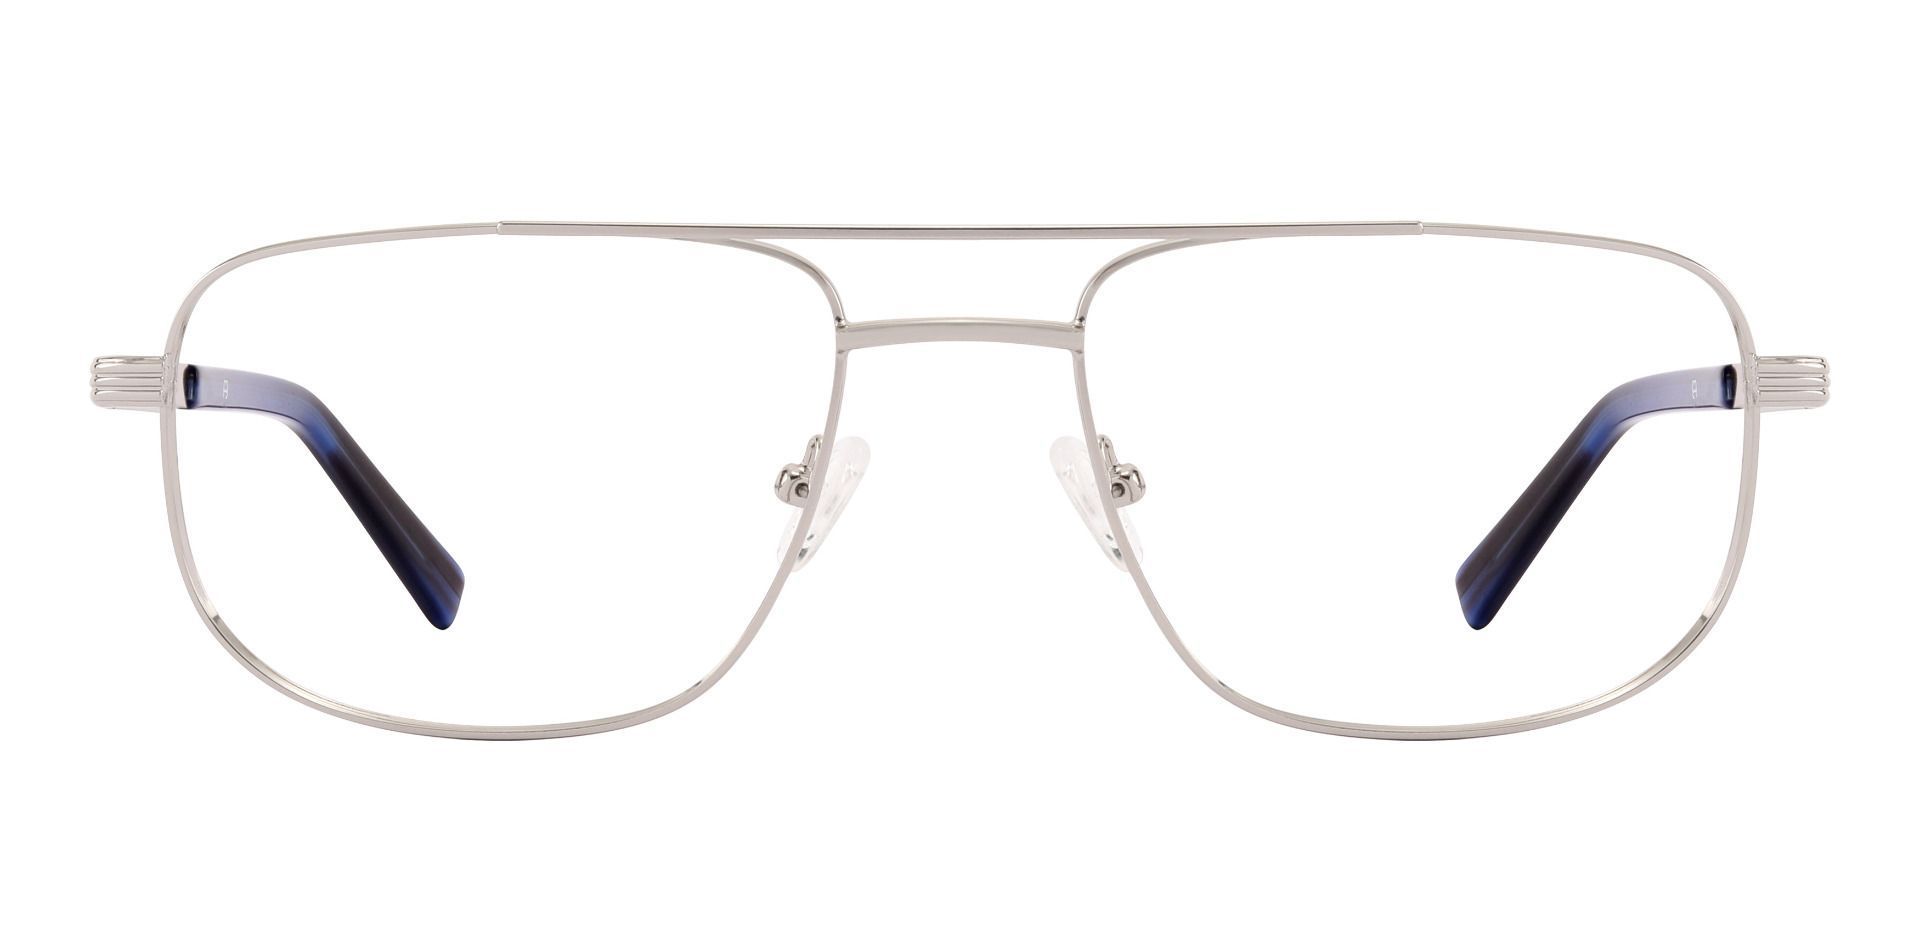 Drayton Aviator Lined Bifocal Glasses - Silver